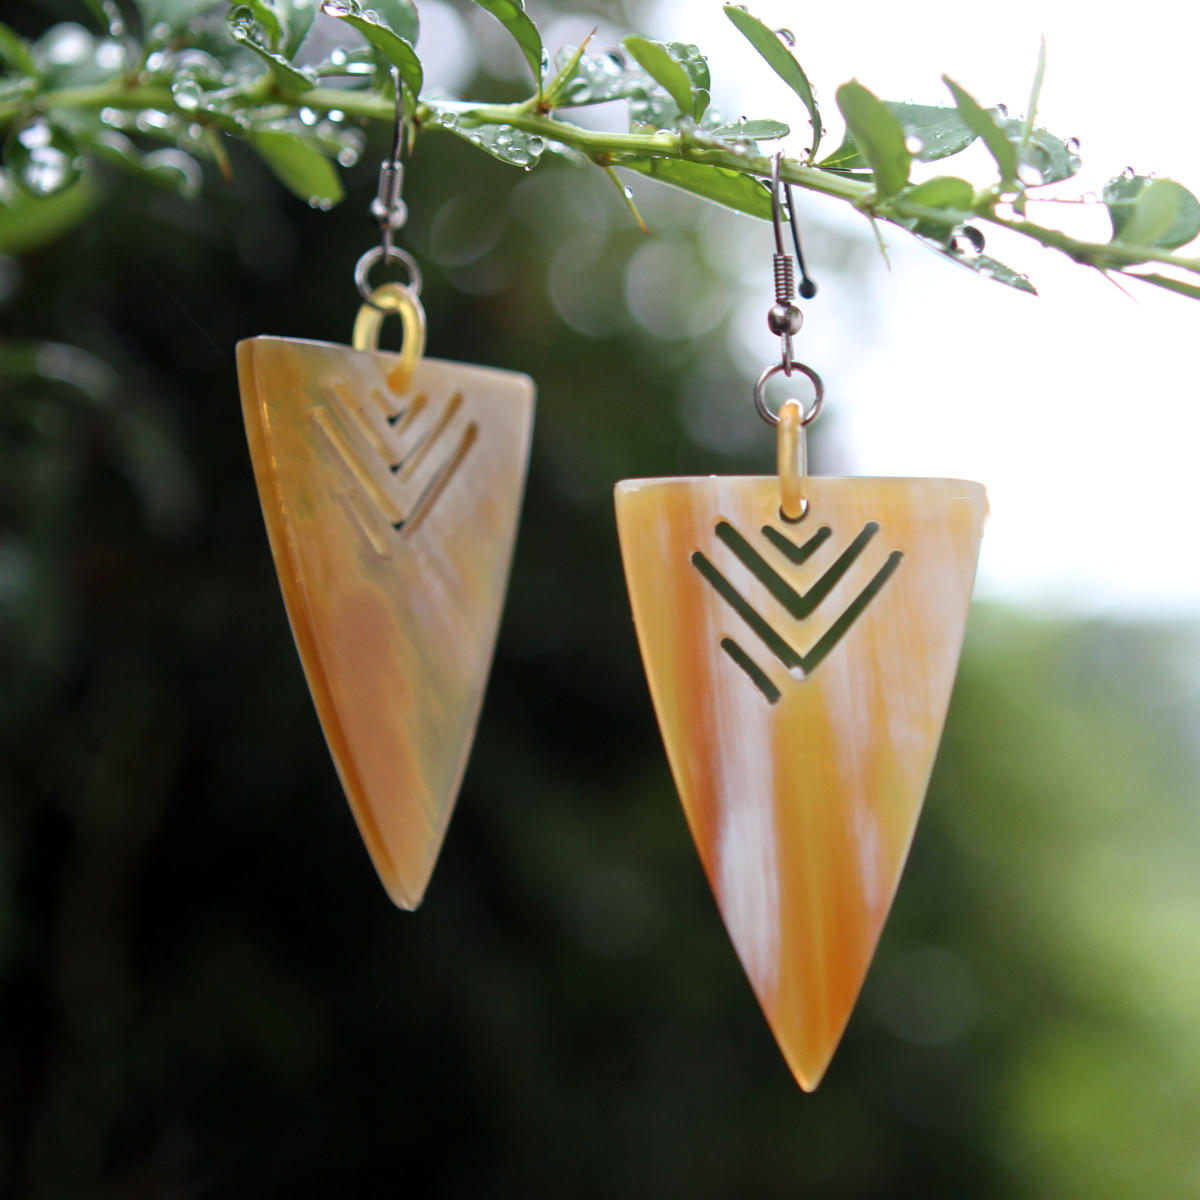 Ethnic earrings, handmade from natural horn, fair trade horn jewelry